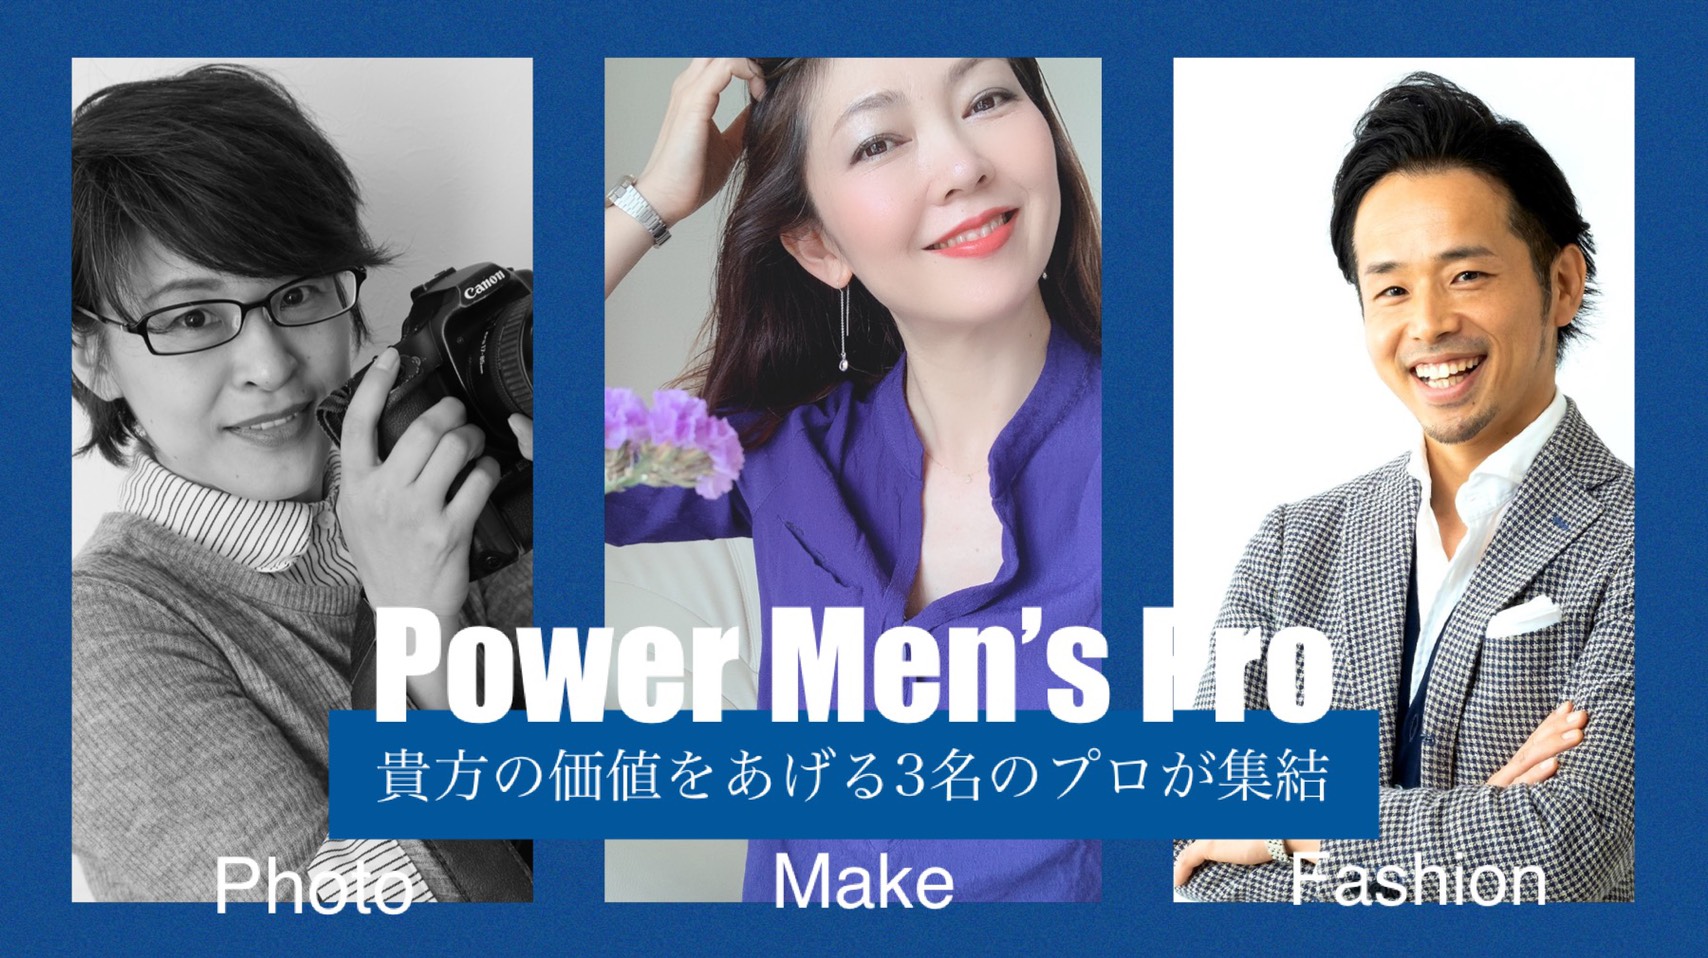 Power Men's Pro.